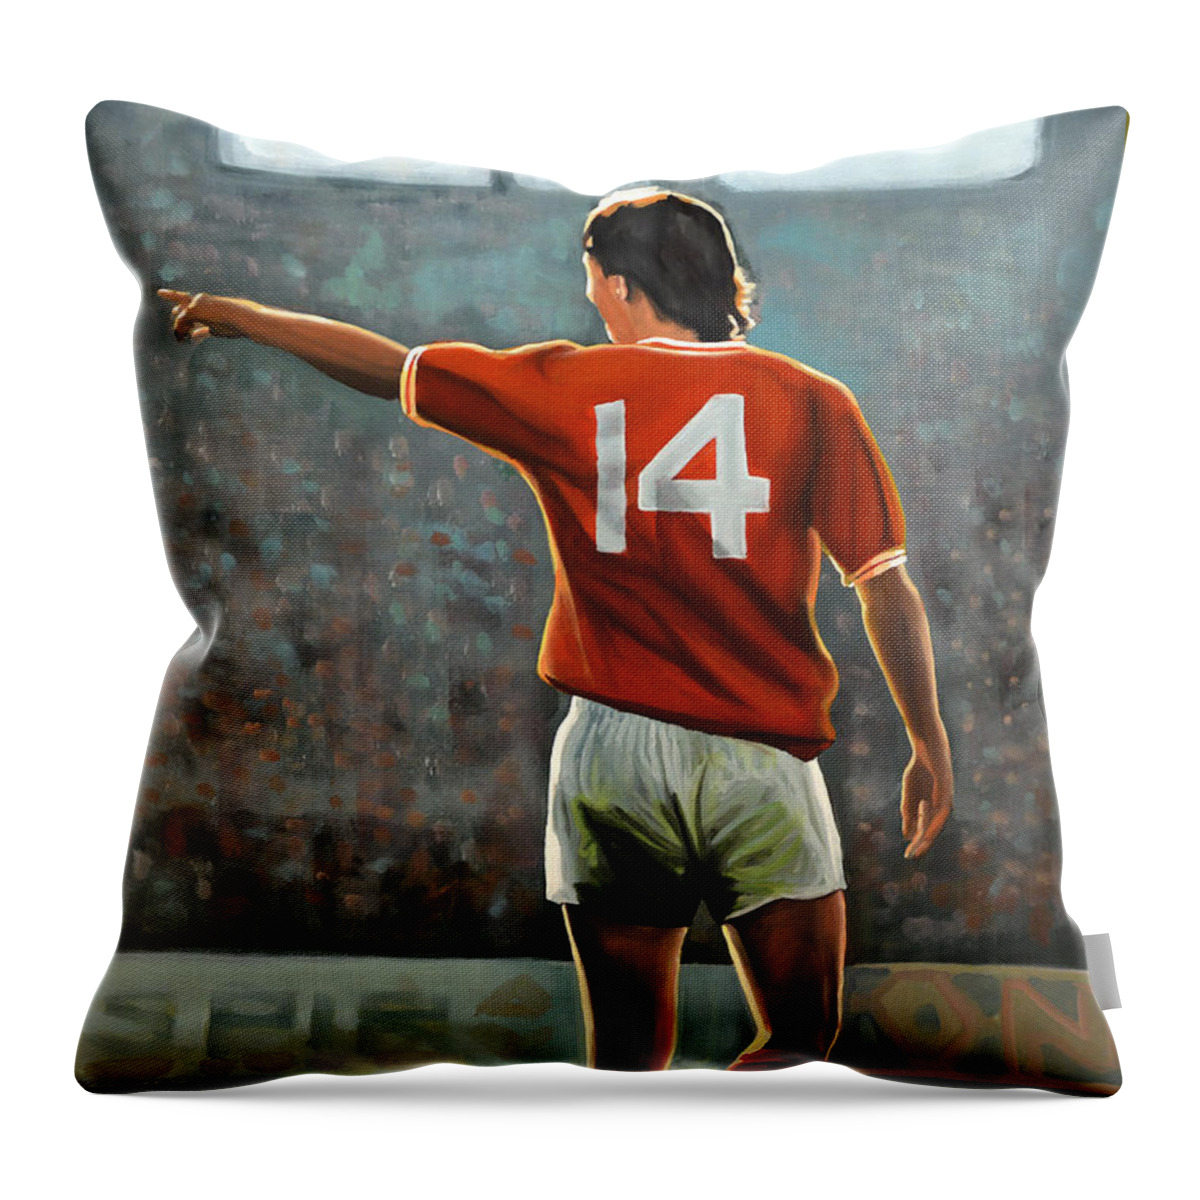 Johan Cruijff Throw Pillow featuring the painting Johan Cruyff Oranje nr 14 by Paul Meijering